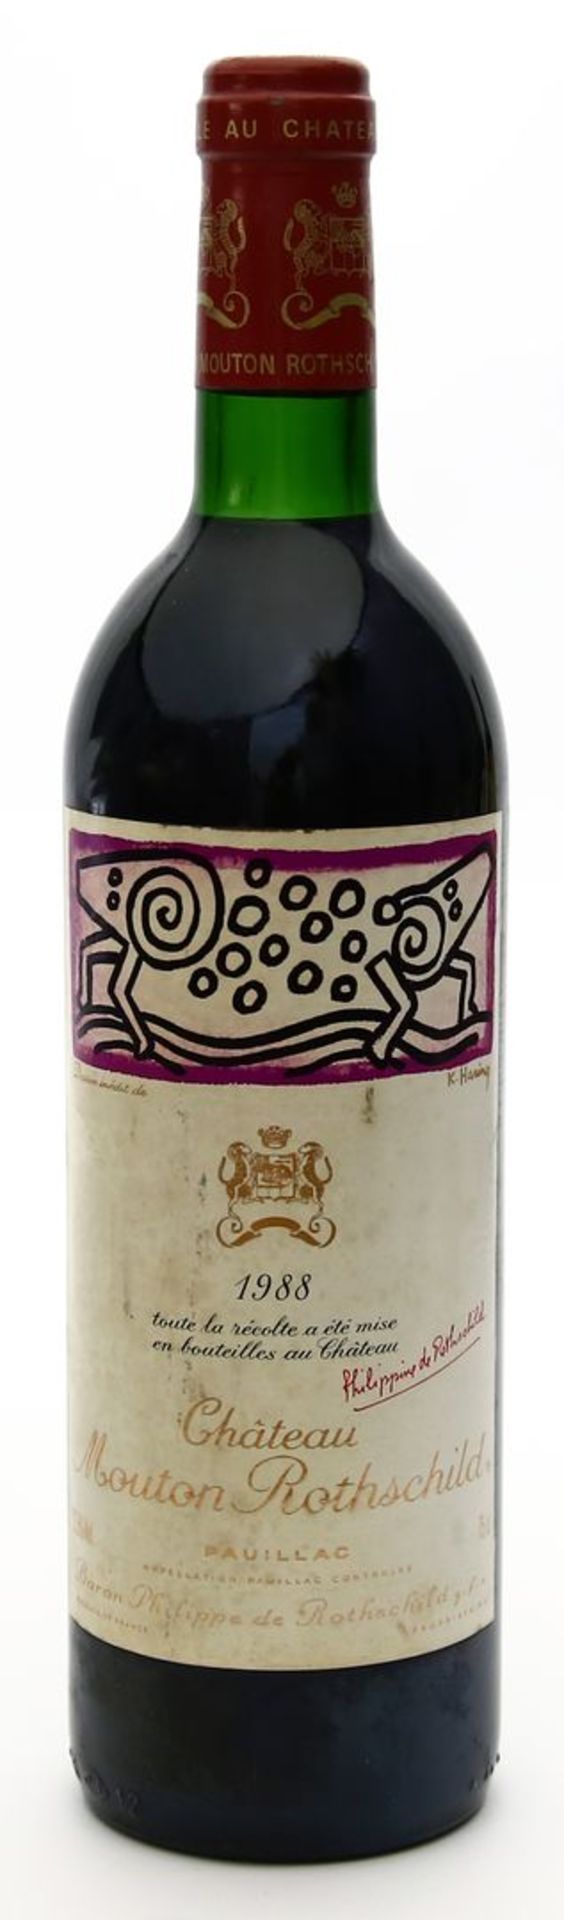 Flasche "Chateau Mouton Rothschild", 1988.